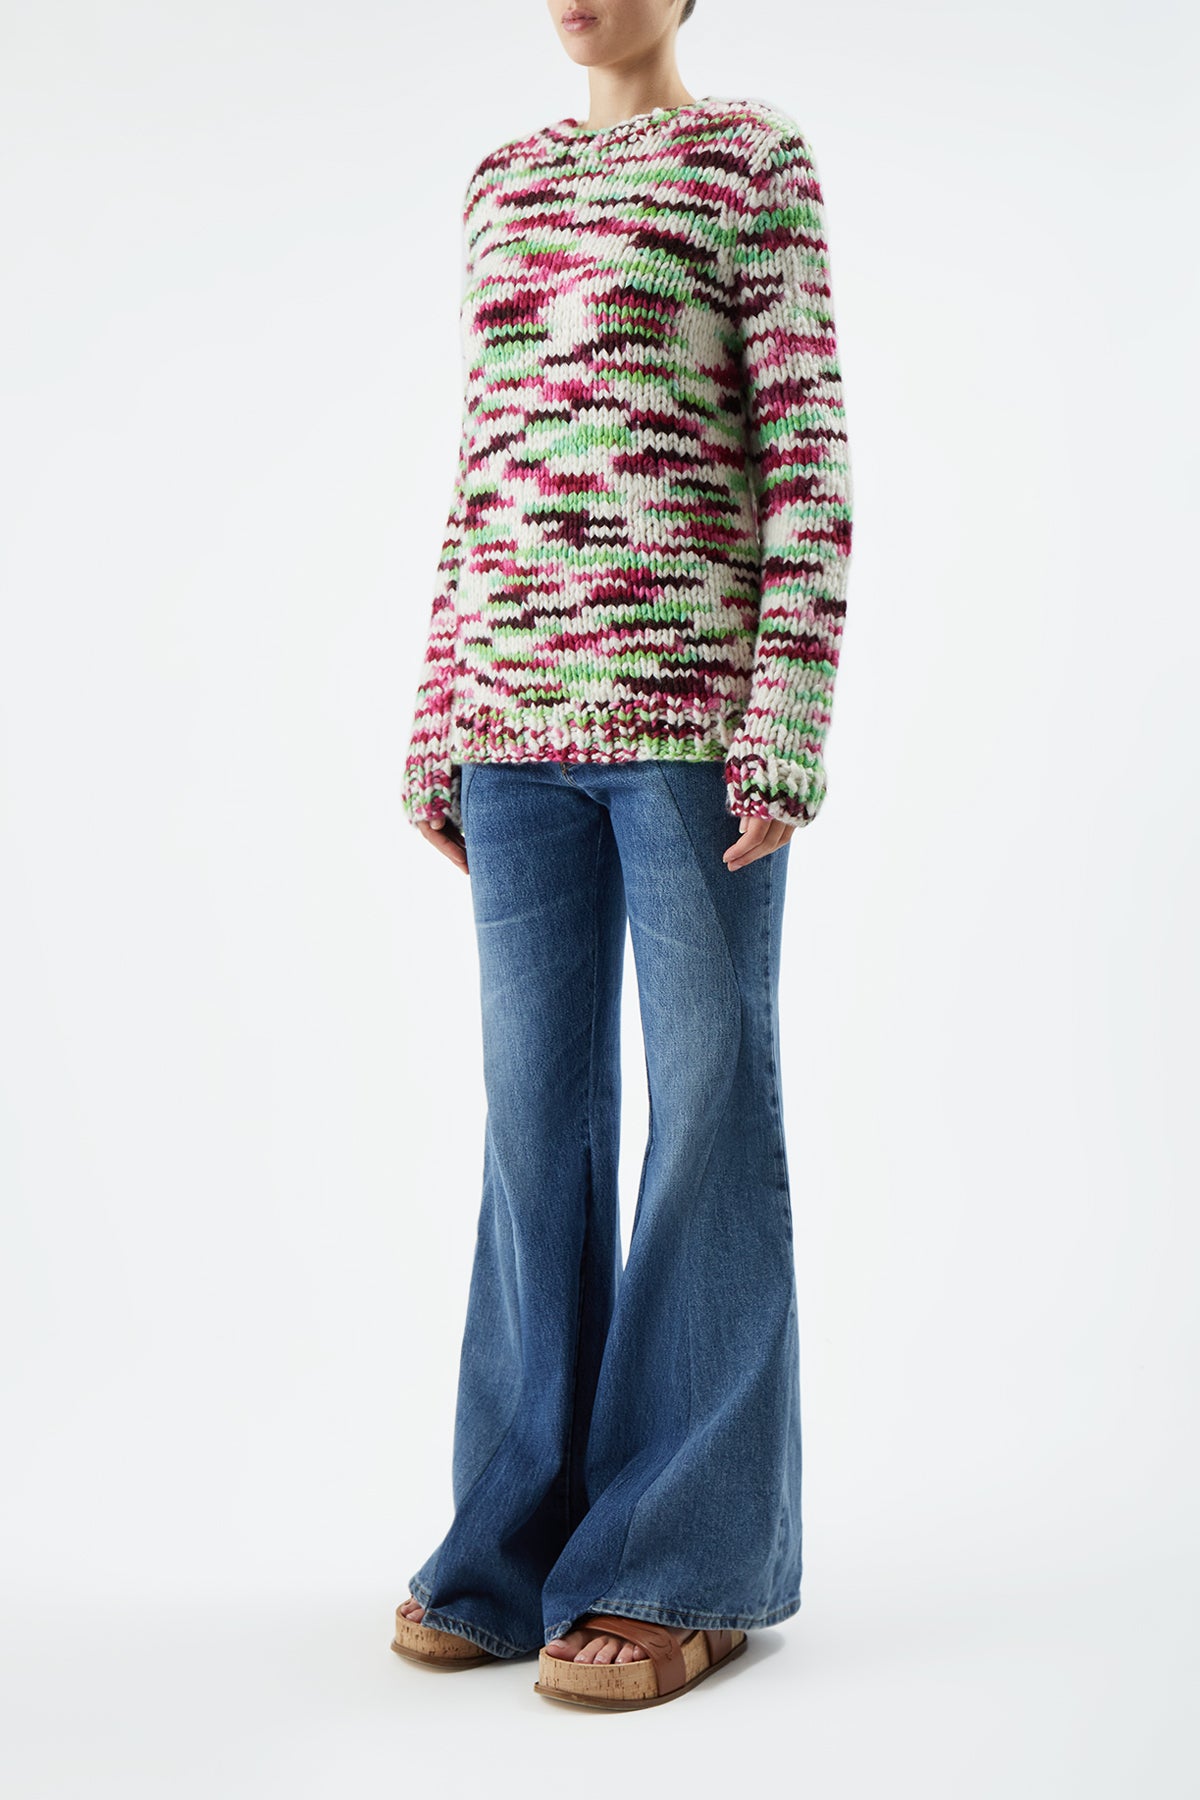 Lawrence Sweater Space Dye in Jewel Multi Welfat Cashmere